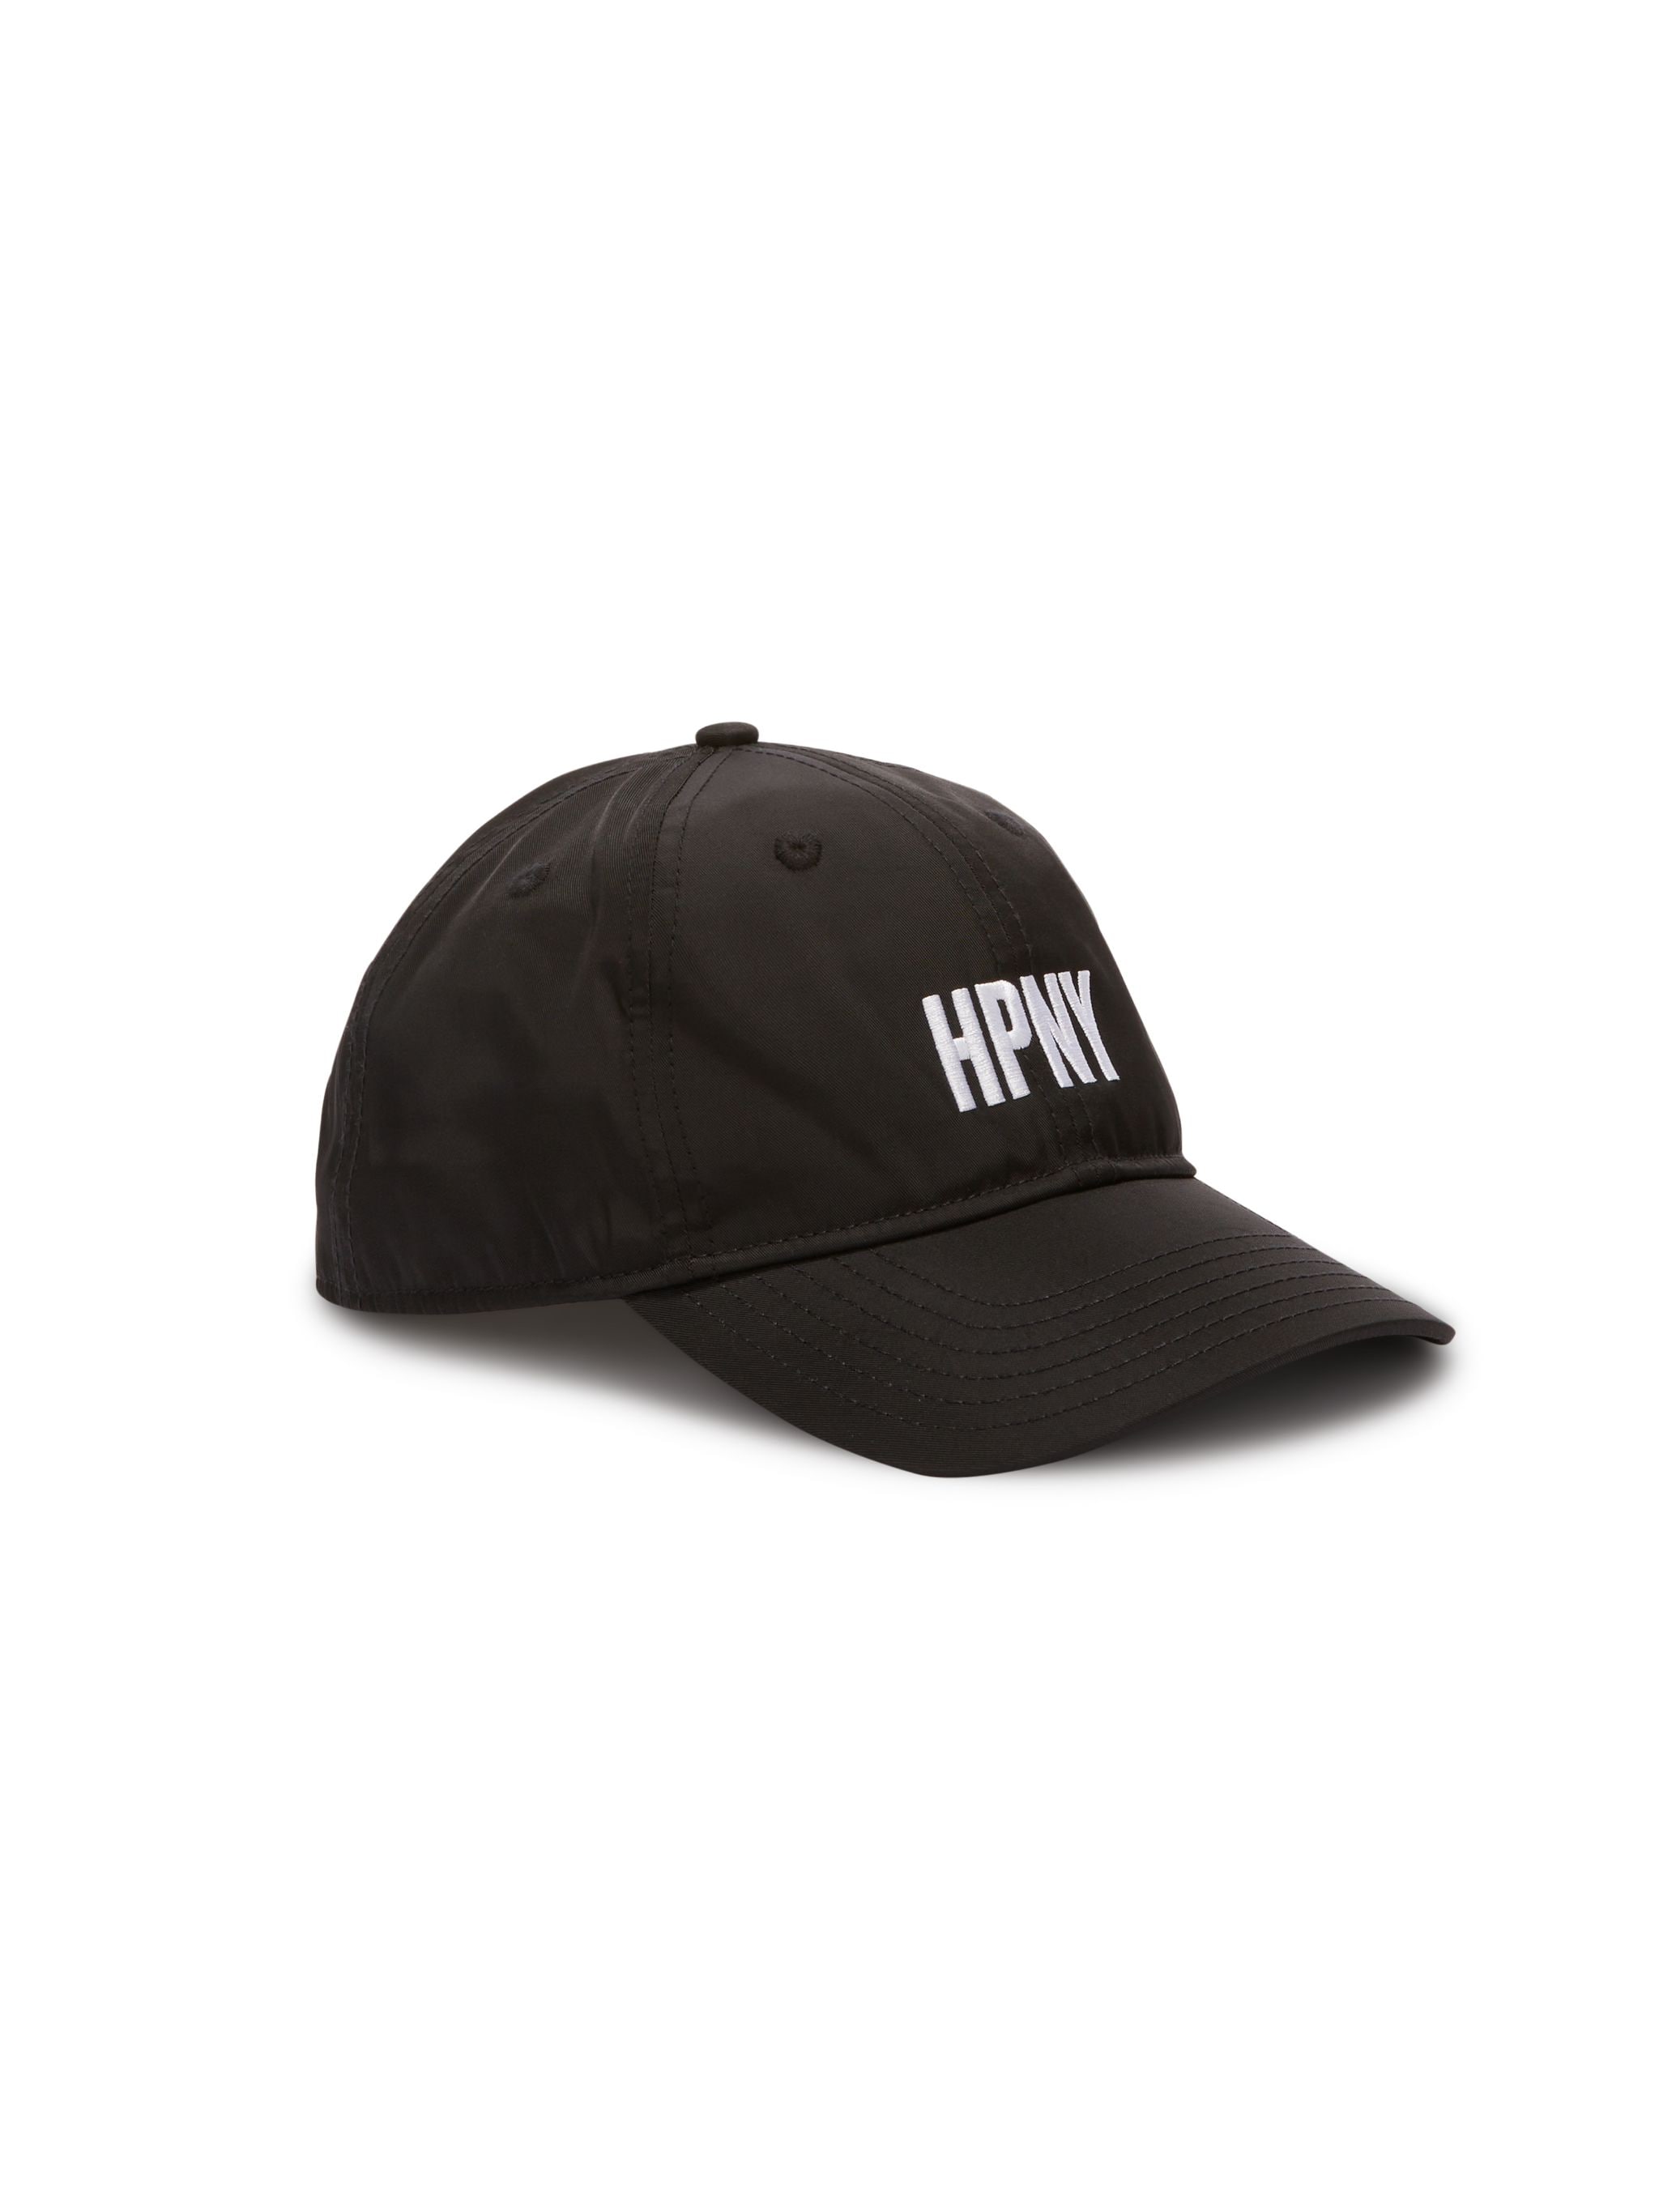 Hpny Emb Nylon Cap | HERON PRESTON® Official Site